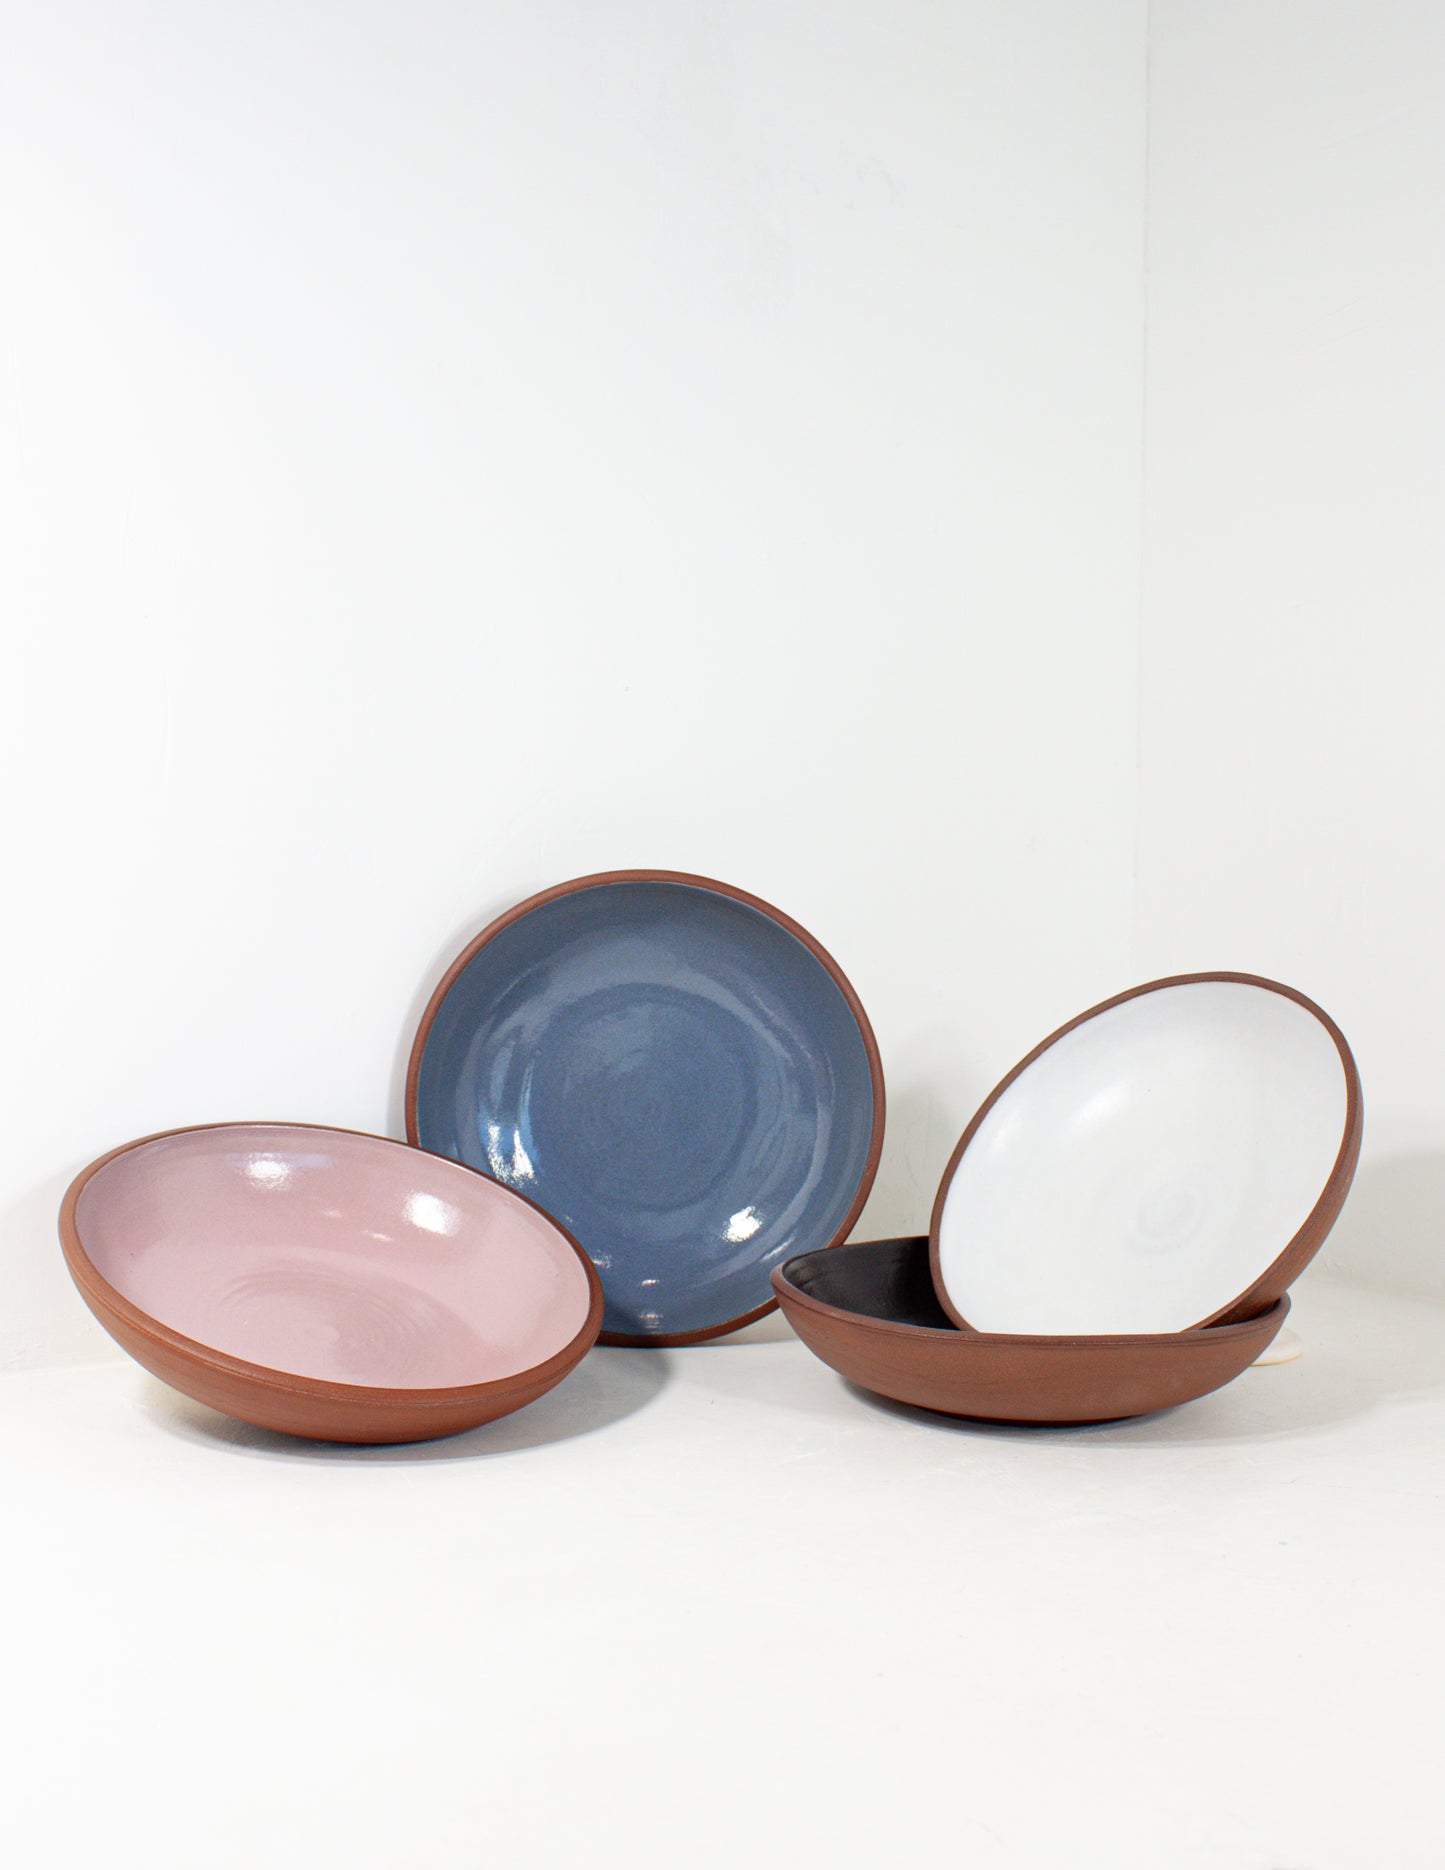 A group of handmade dinner bowls